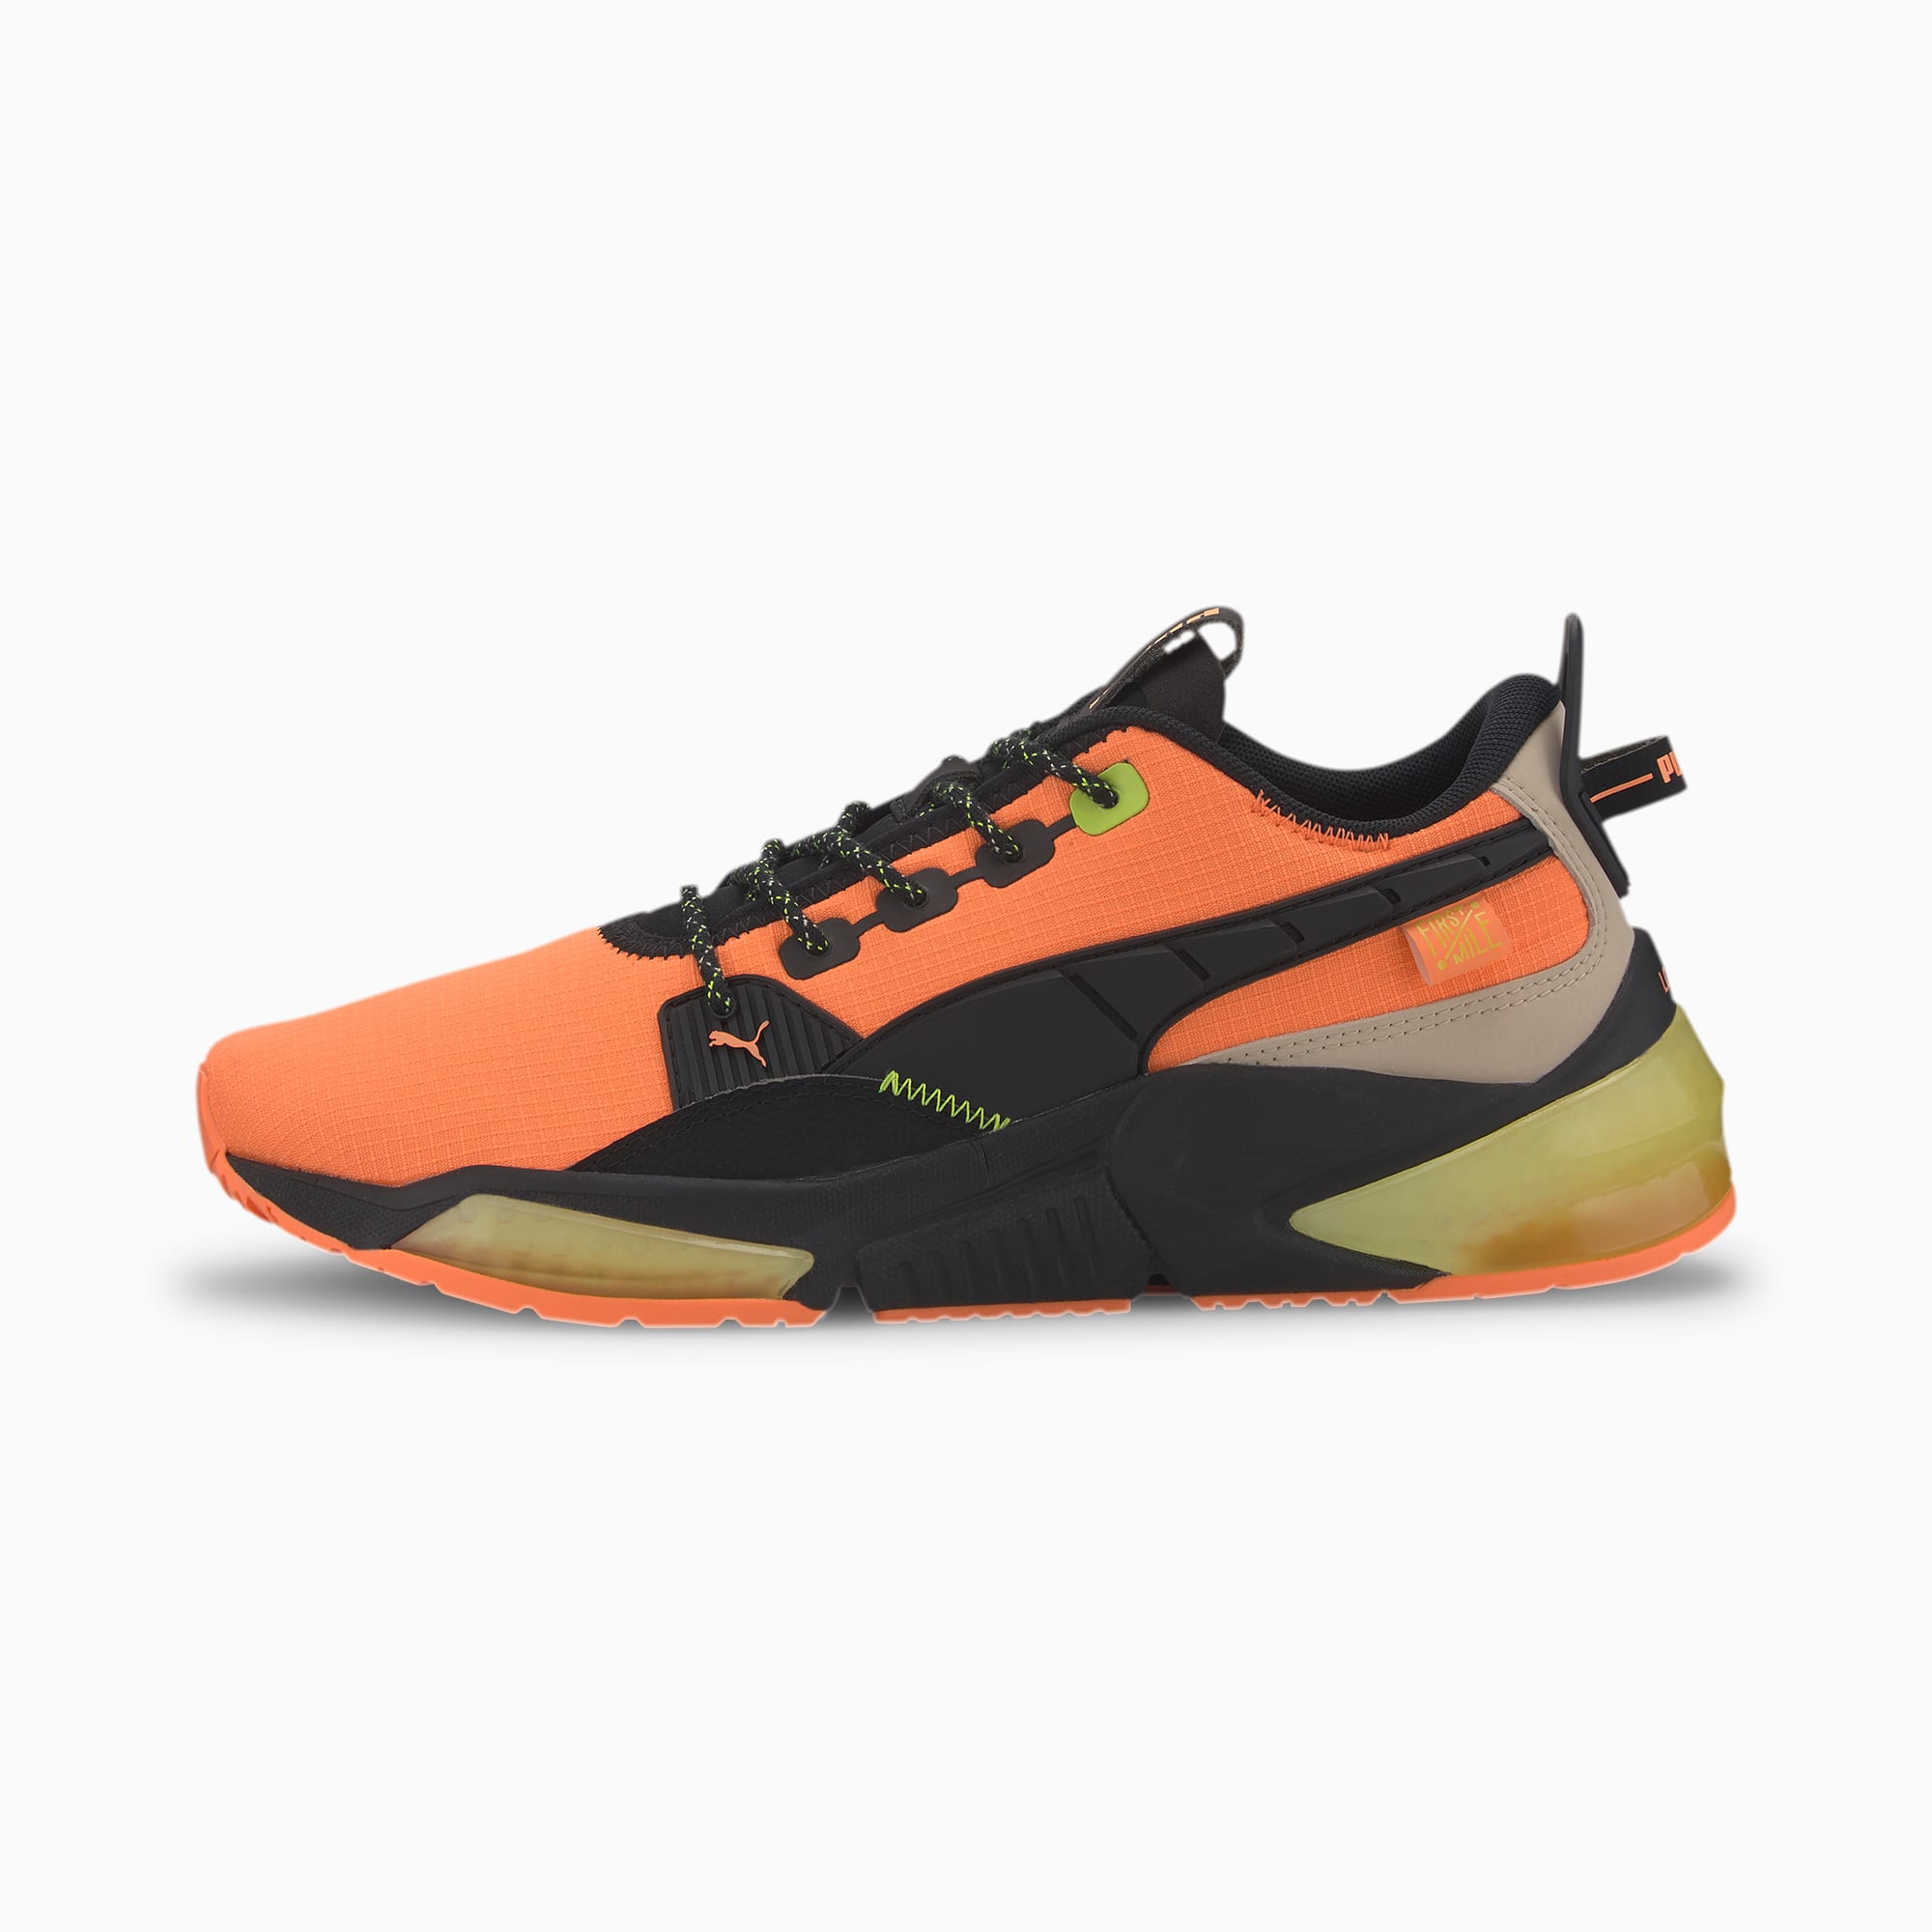 puma shoes orange black